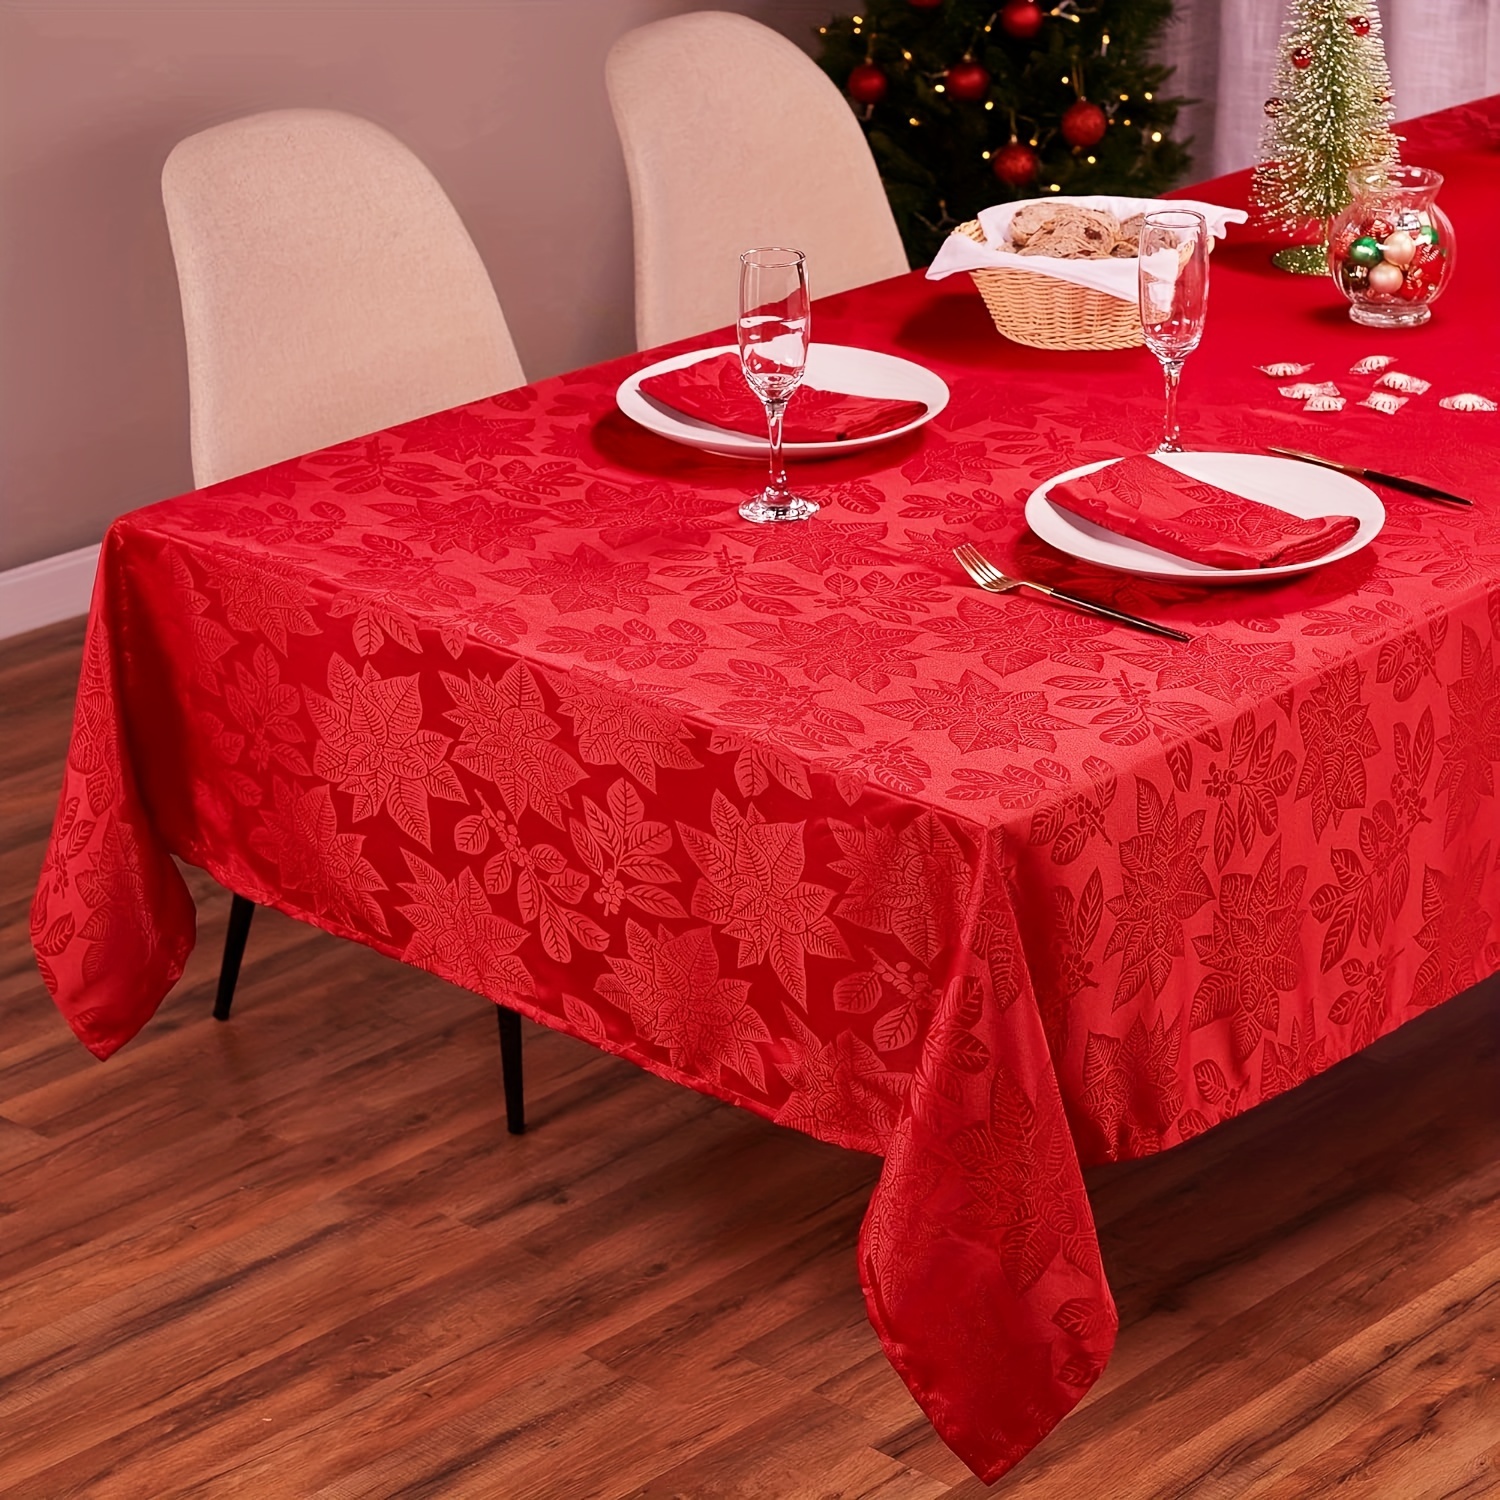 ColorBird - Mantel de tela jacquard con estampado de damasco de voluta, a  prueba de derrames, impermeable, para cocina, comedor, decoración de ropa